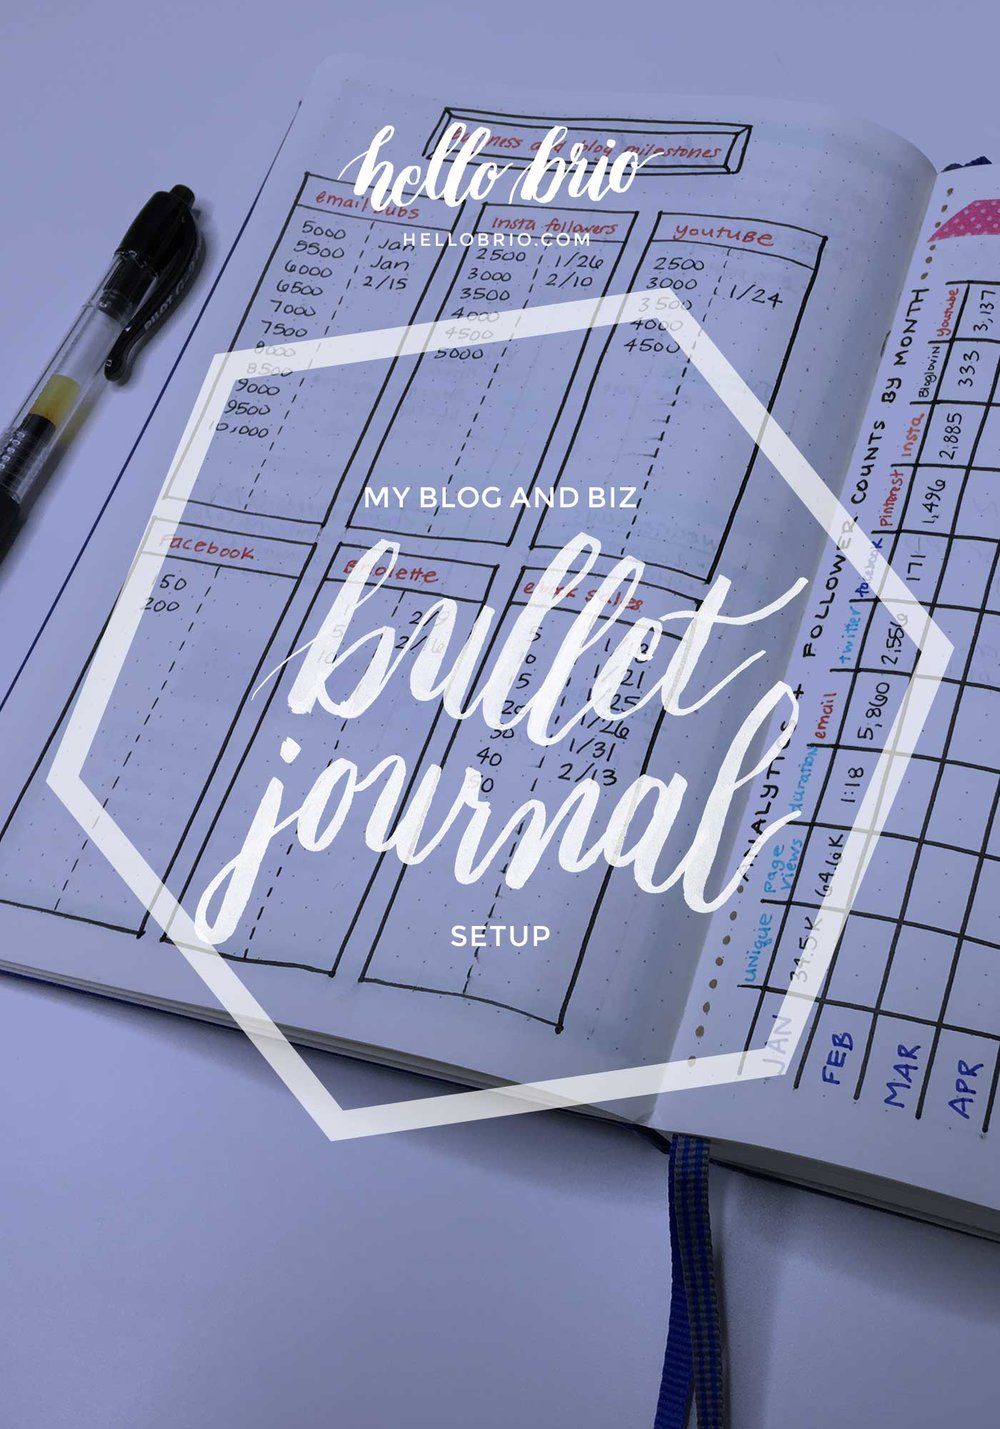 My bullet journal setup: blog & business planning